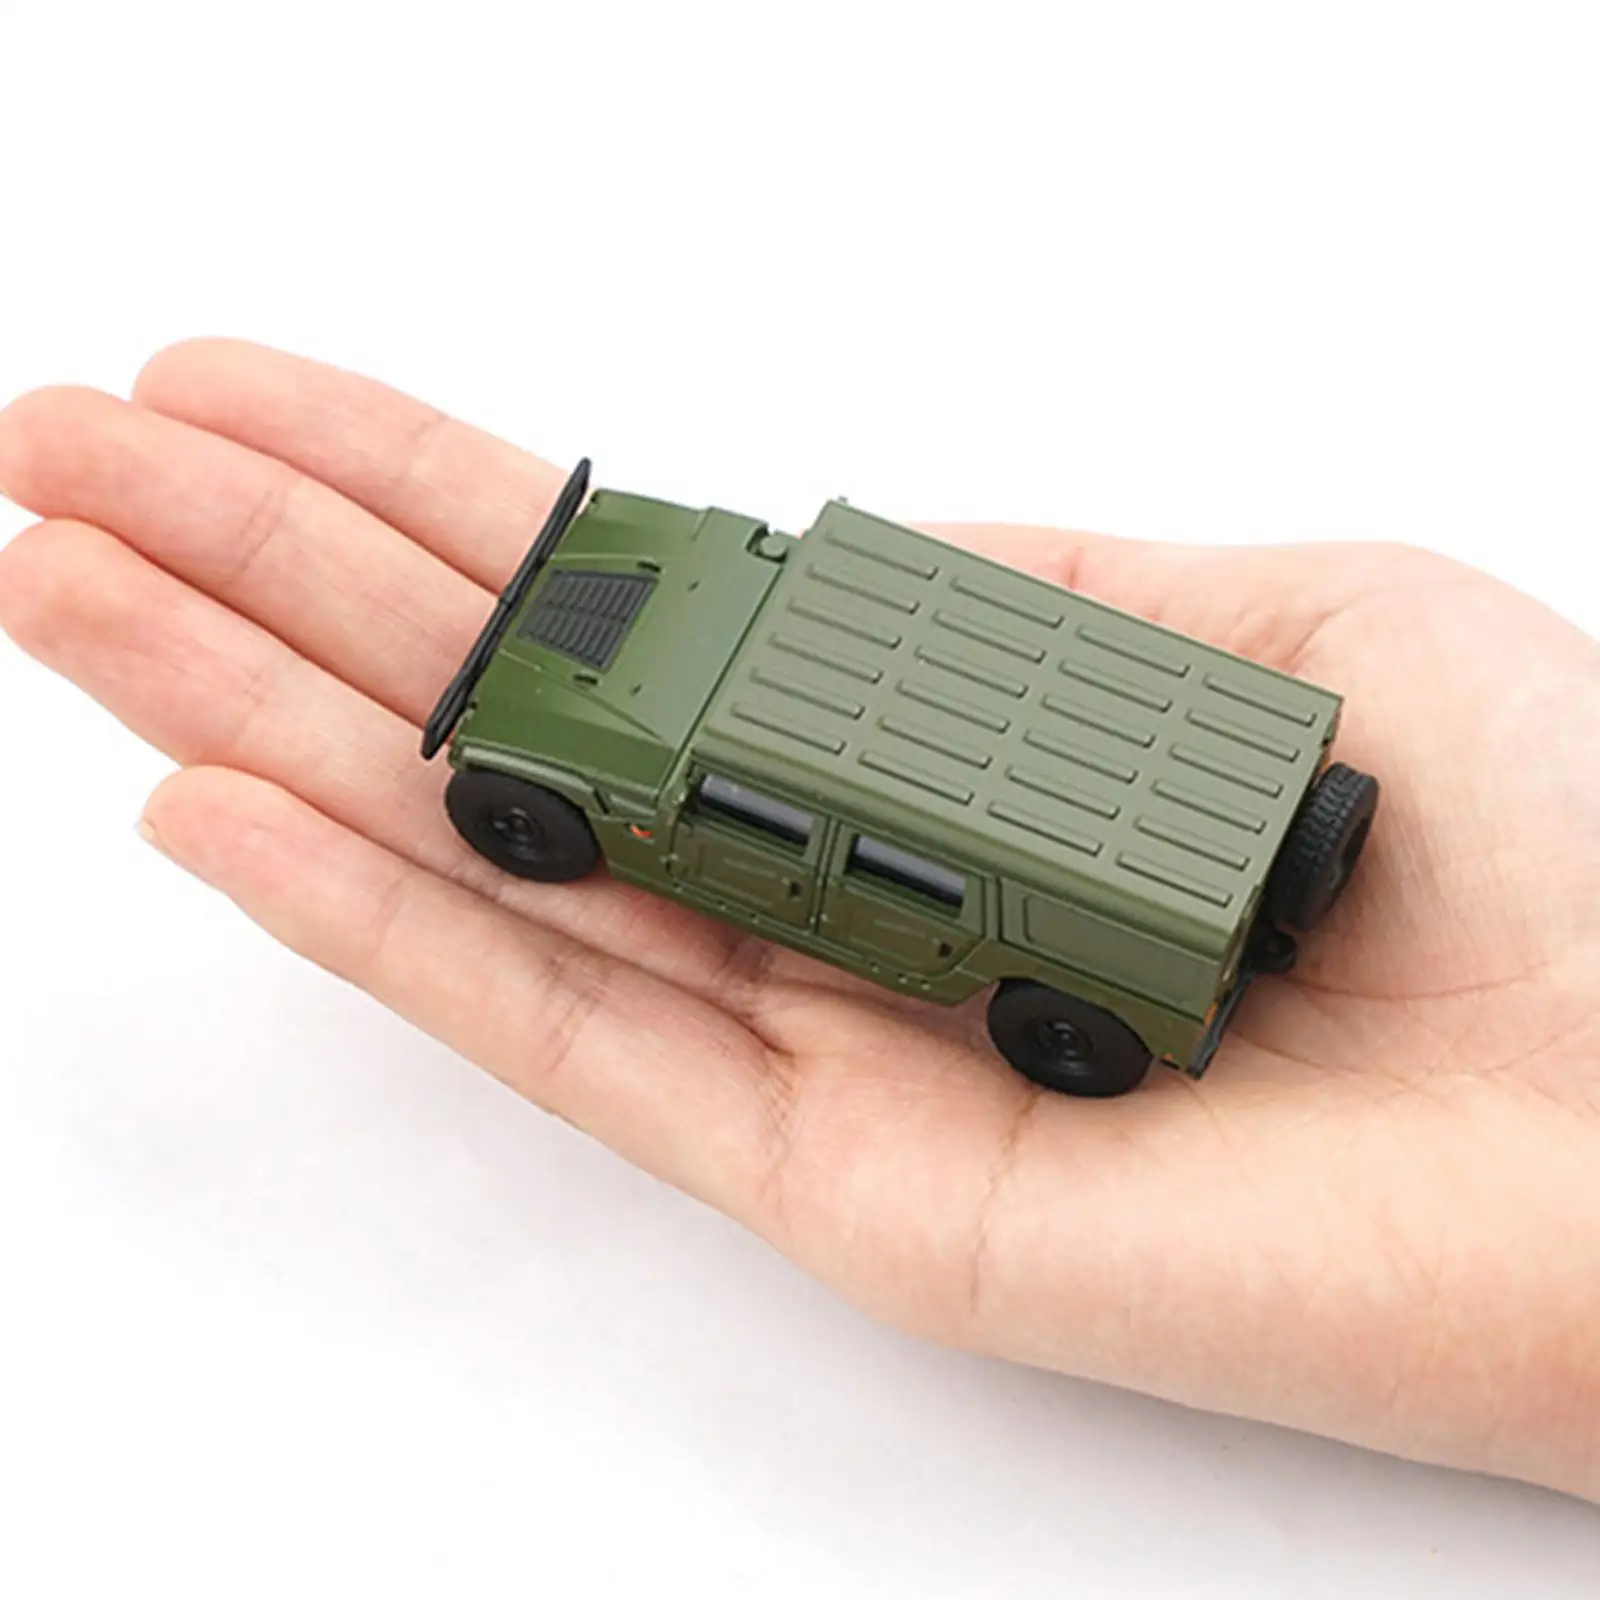 1/64 Car Model Figure Mini Vehicles Toys Collection Diorama Scenes for Scenery Landscape